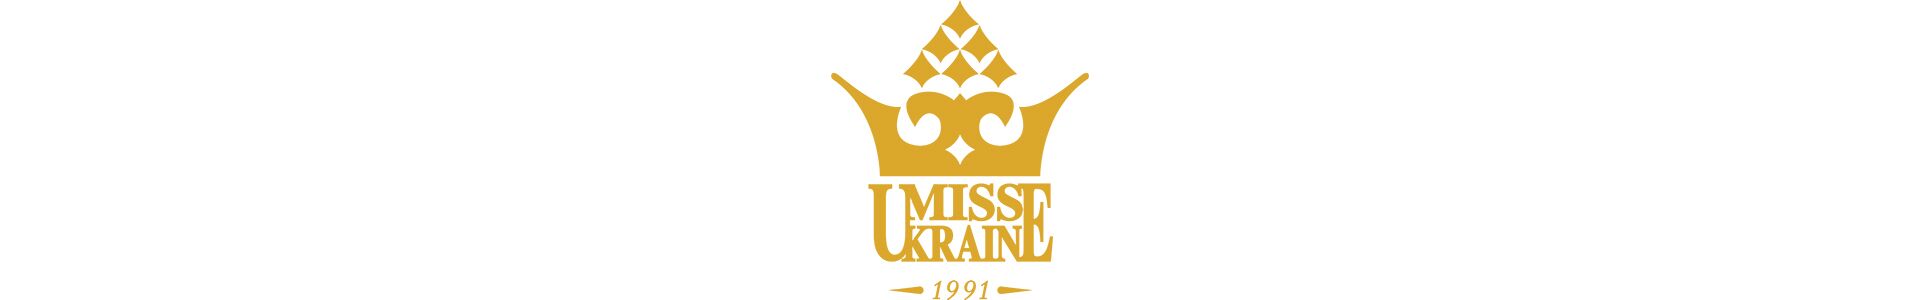 Прес-коктейль "Міс Україна-2019"